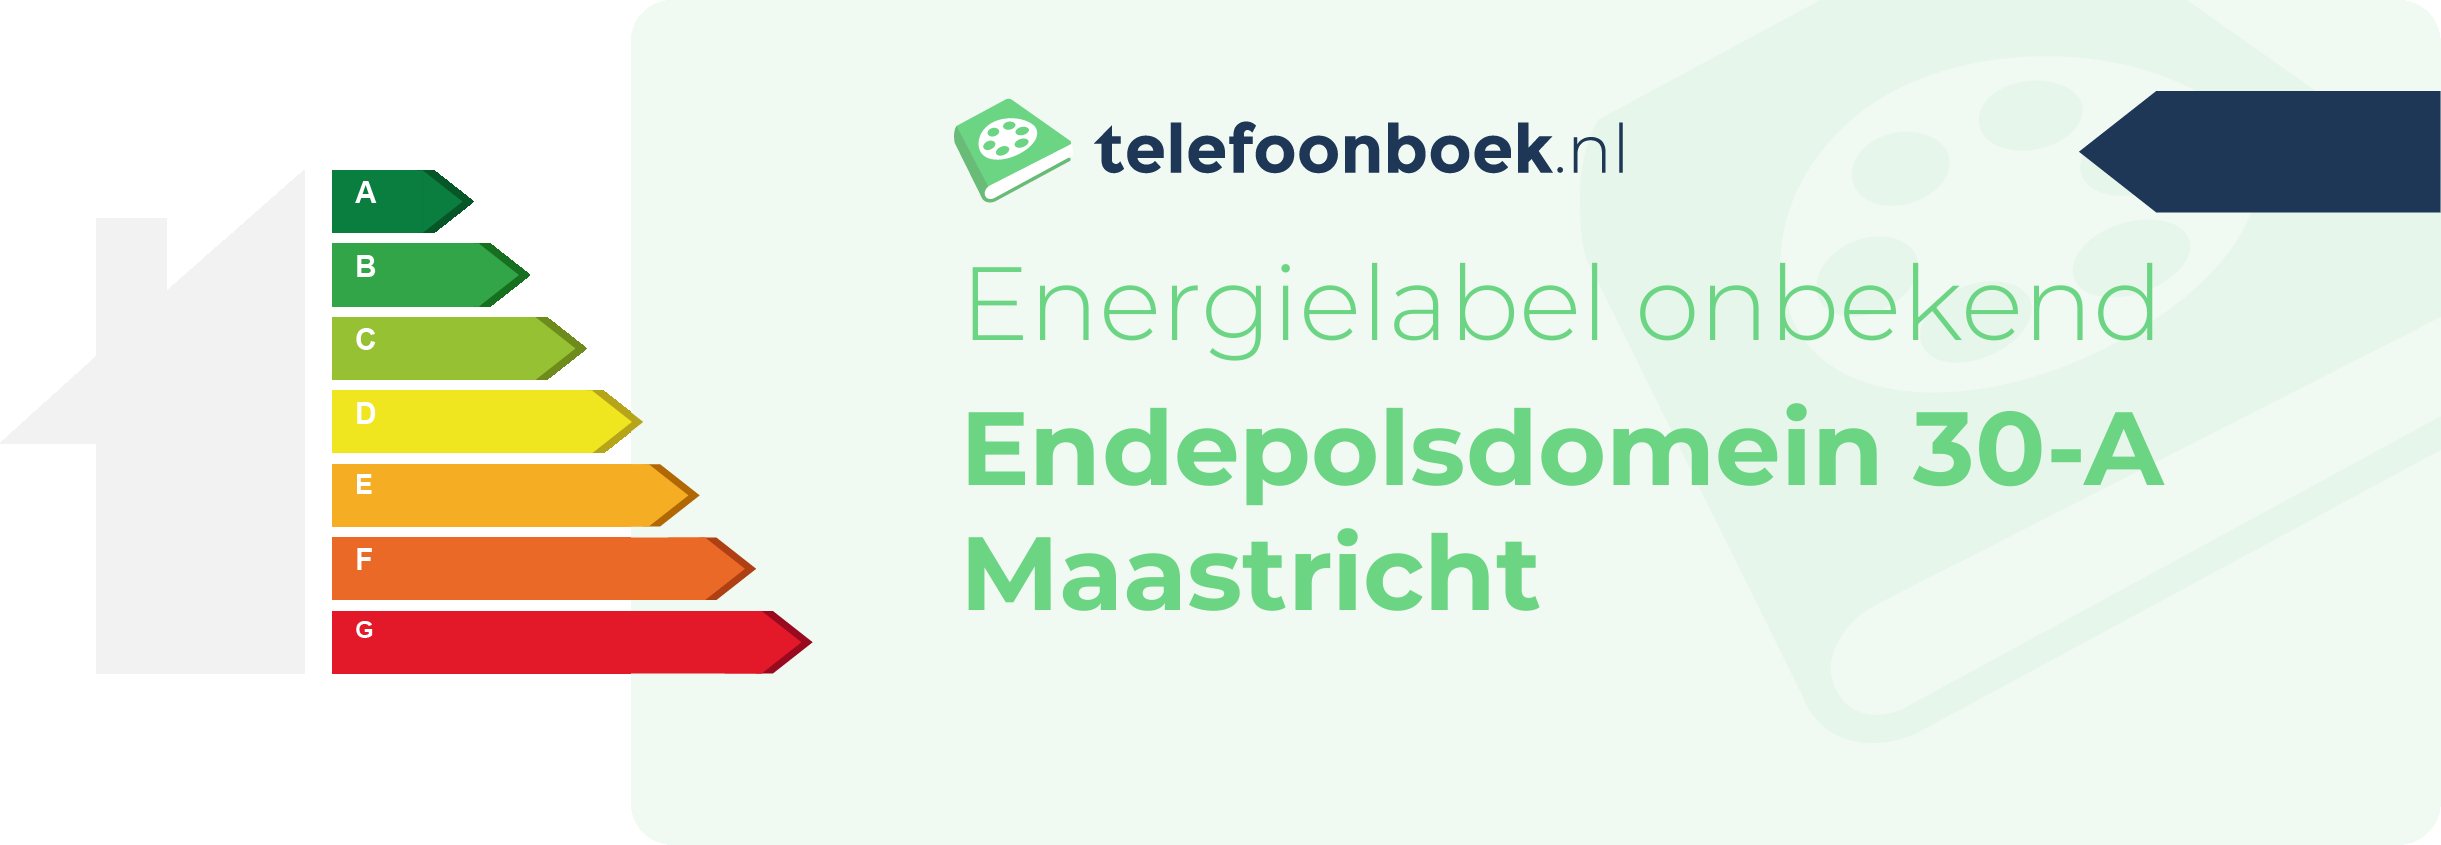 Energielabel Endepolsdomein 30-A Maastricht